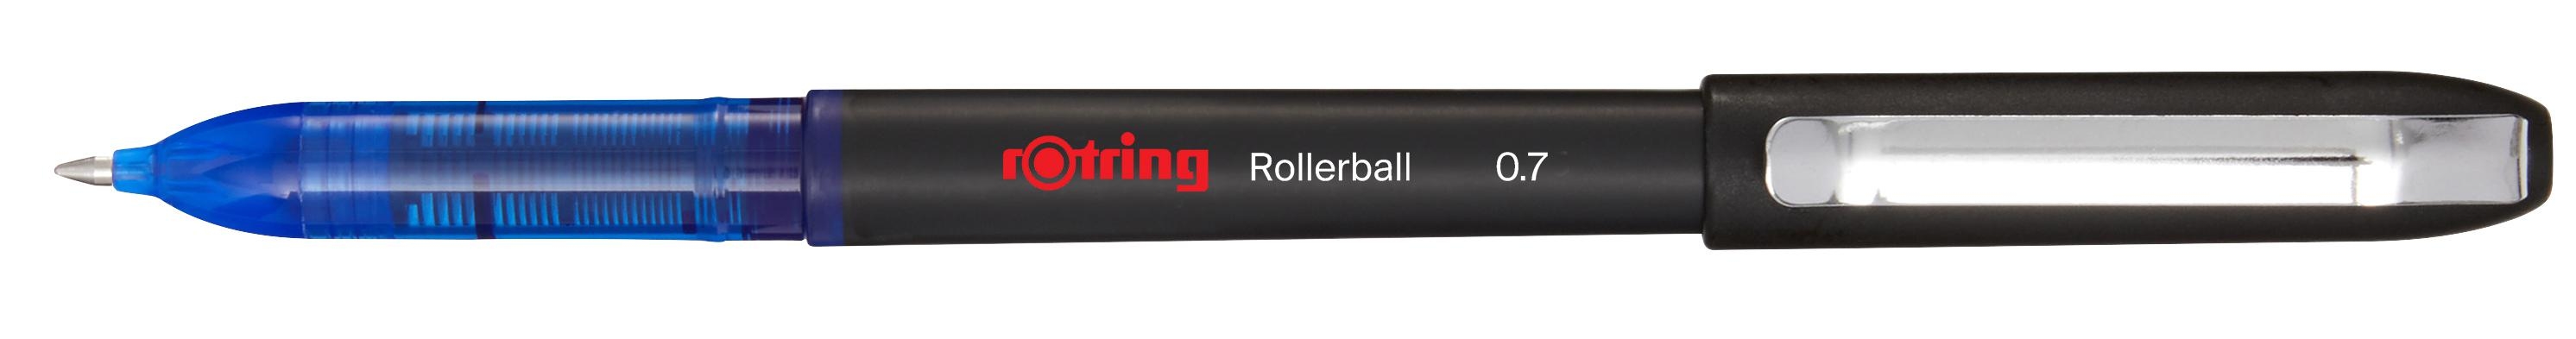 ROTRING Rollerball 0.7mm 2146106 bleu